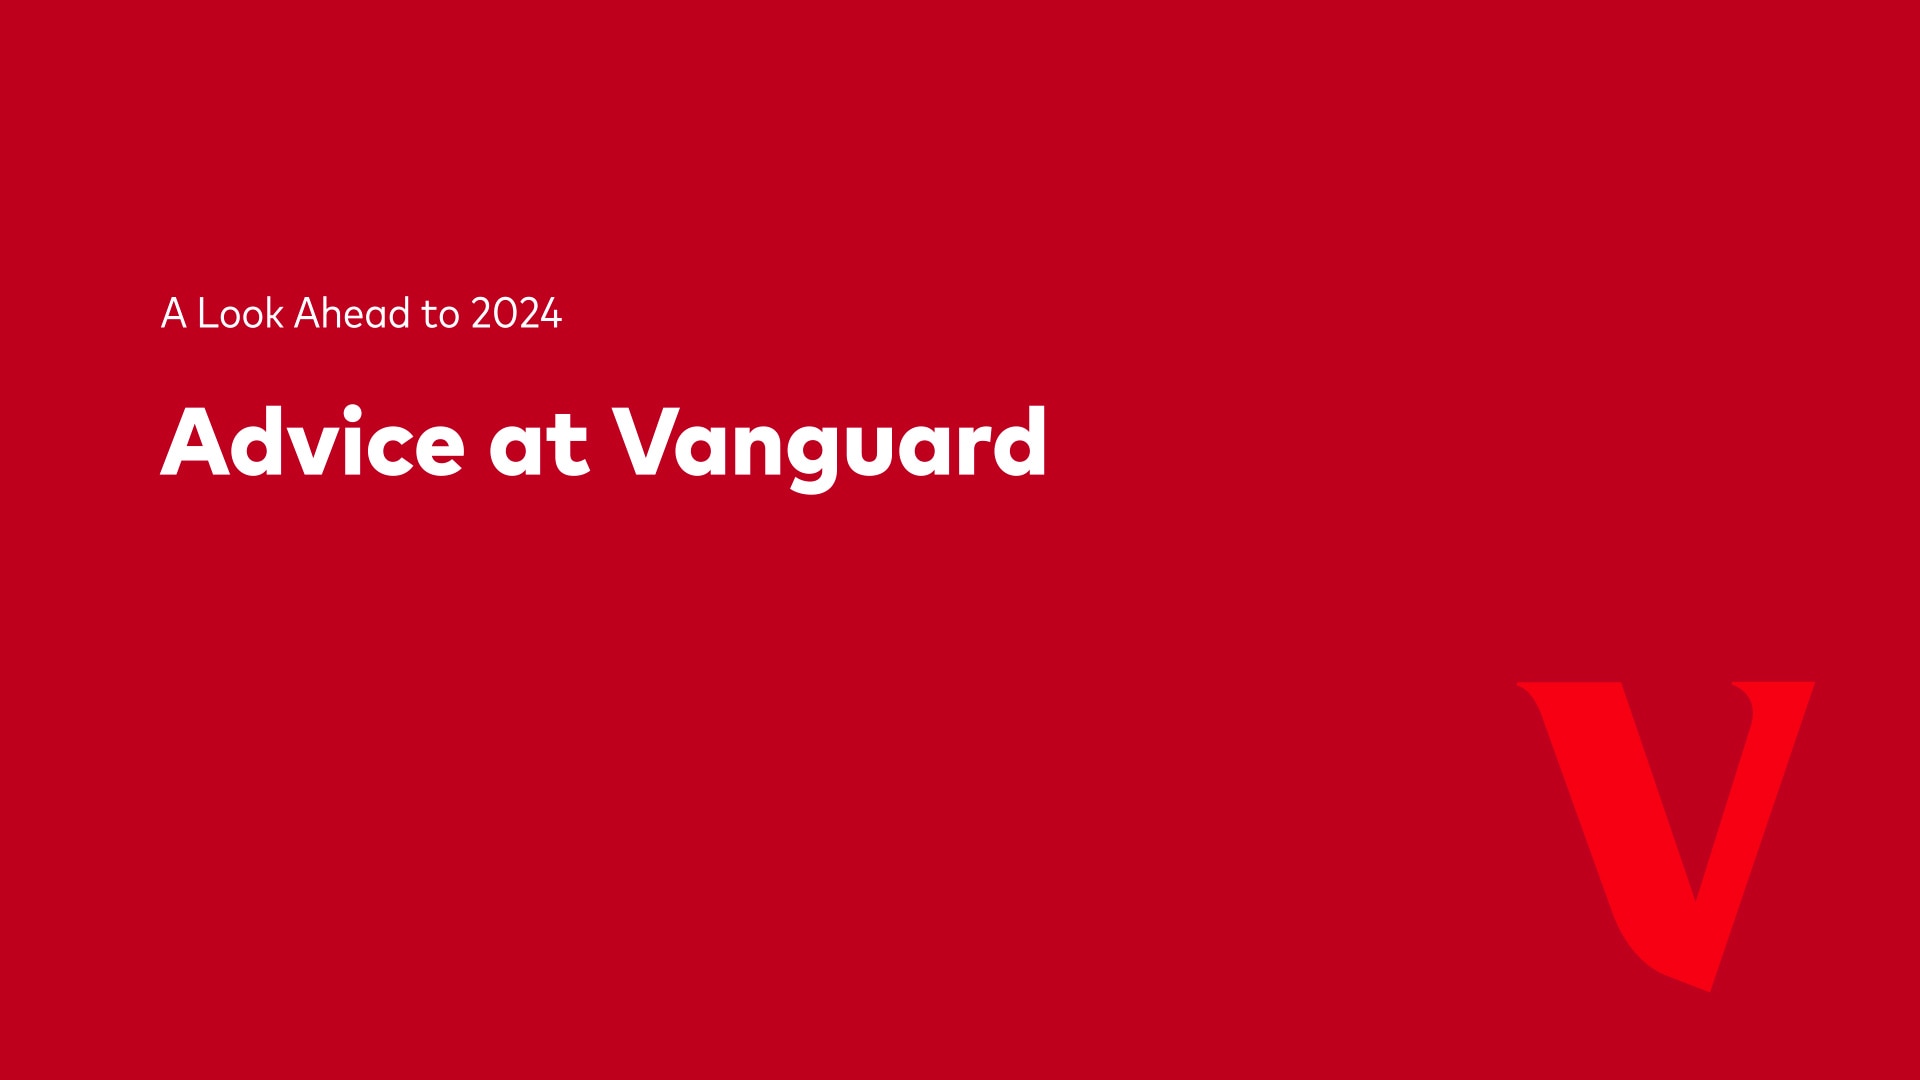 A Look Ahead 2024: Advice at Vanguard